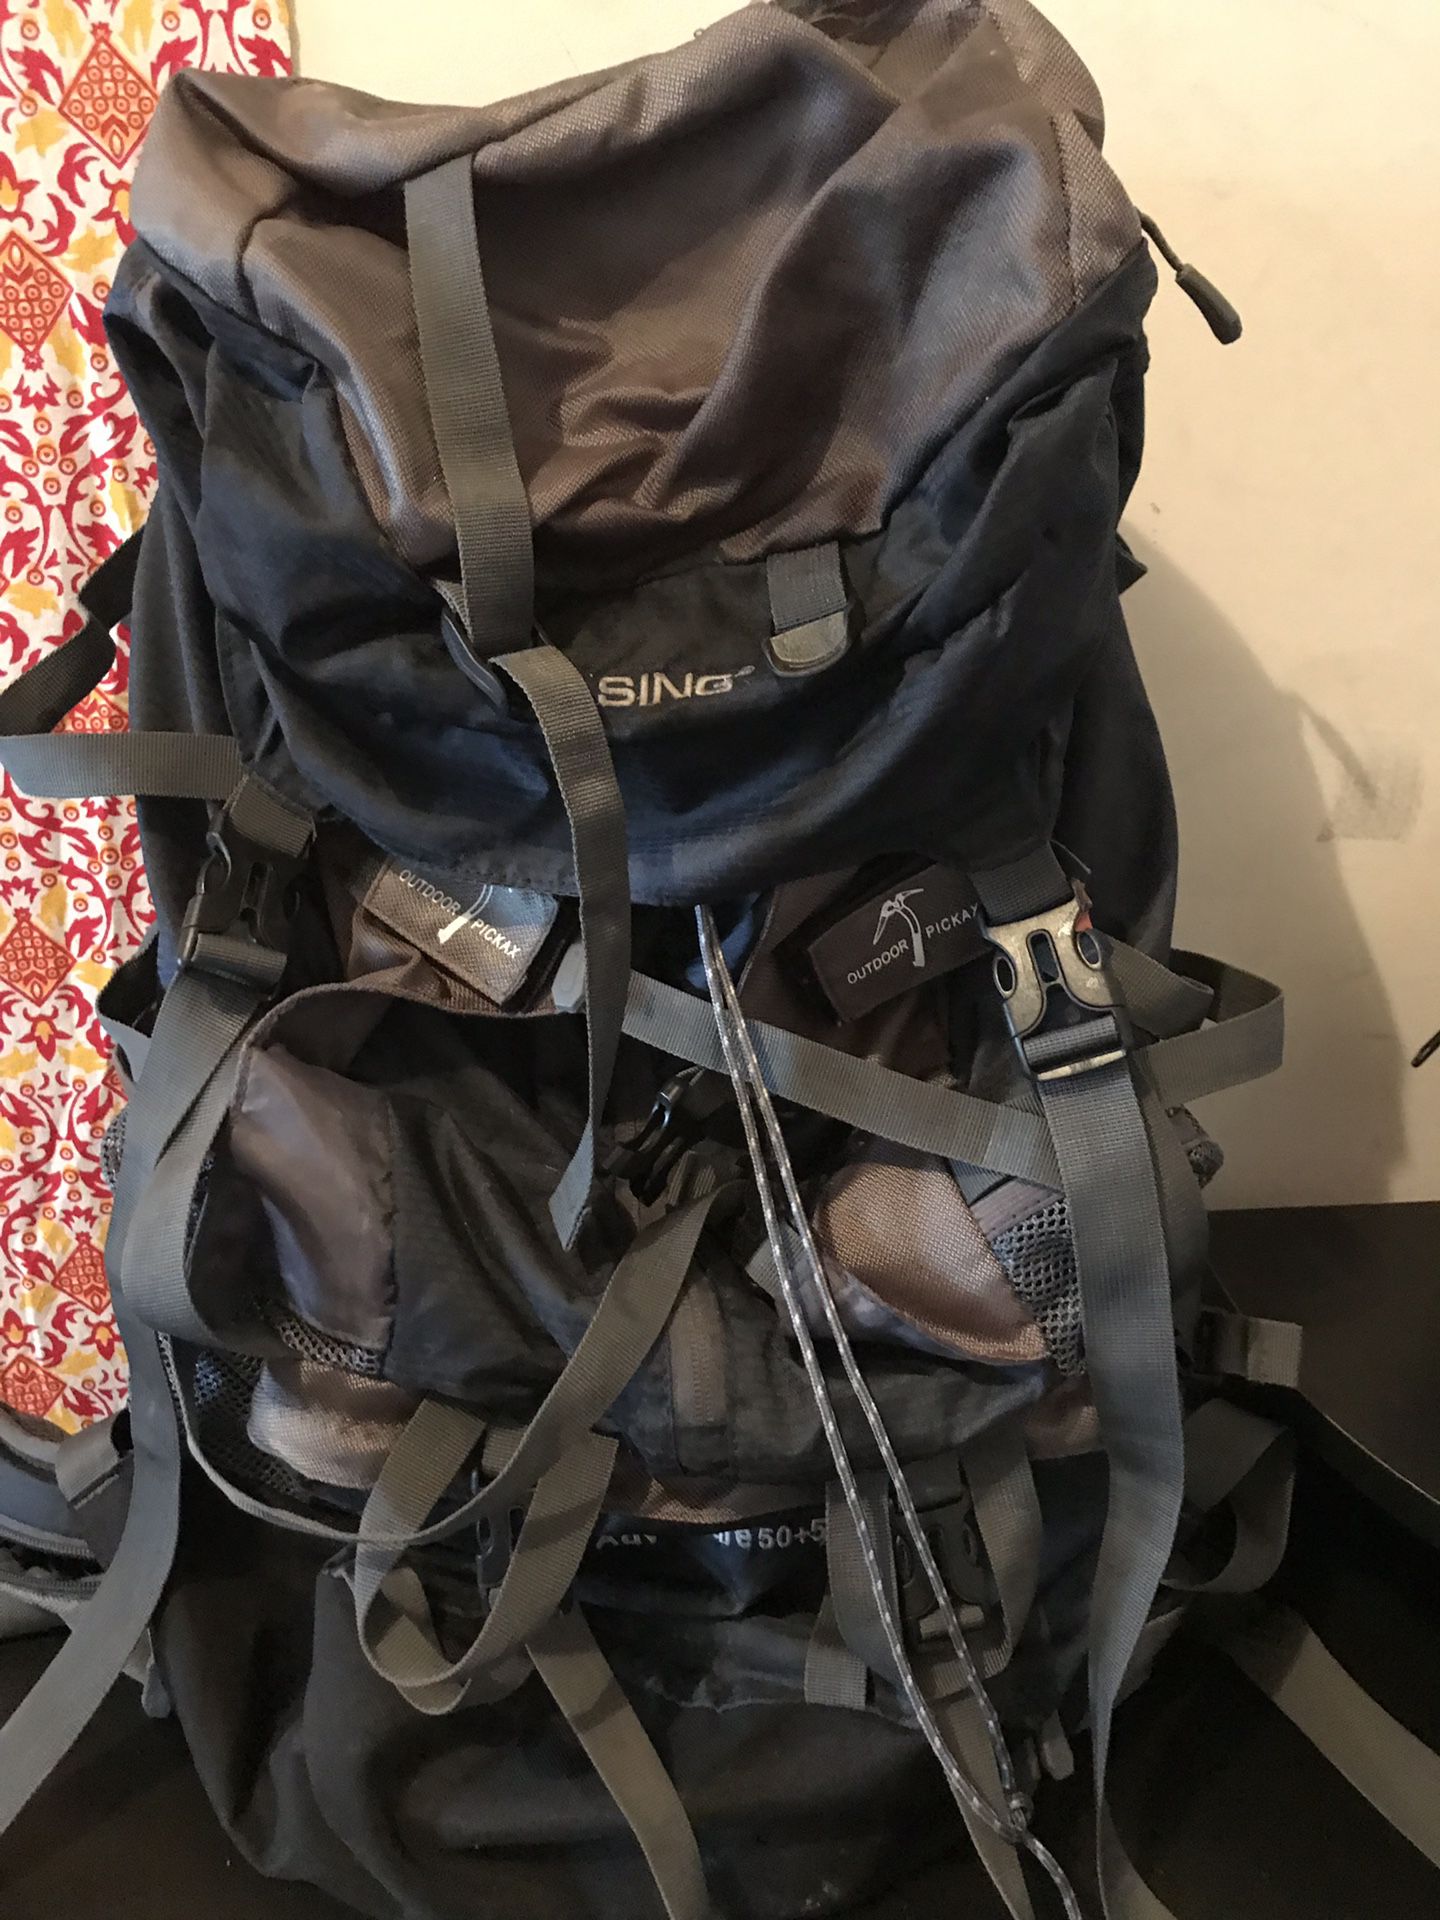 55 liter backpacking pack